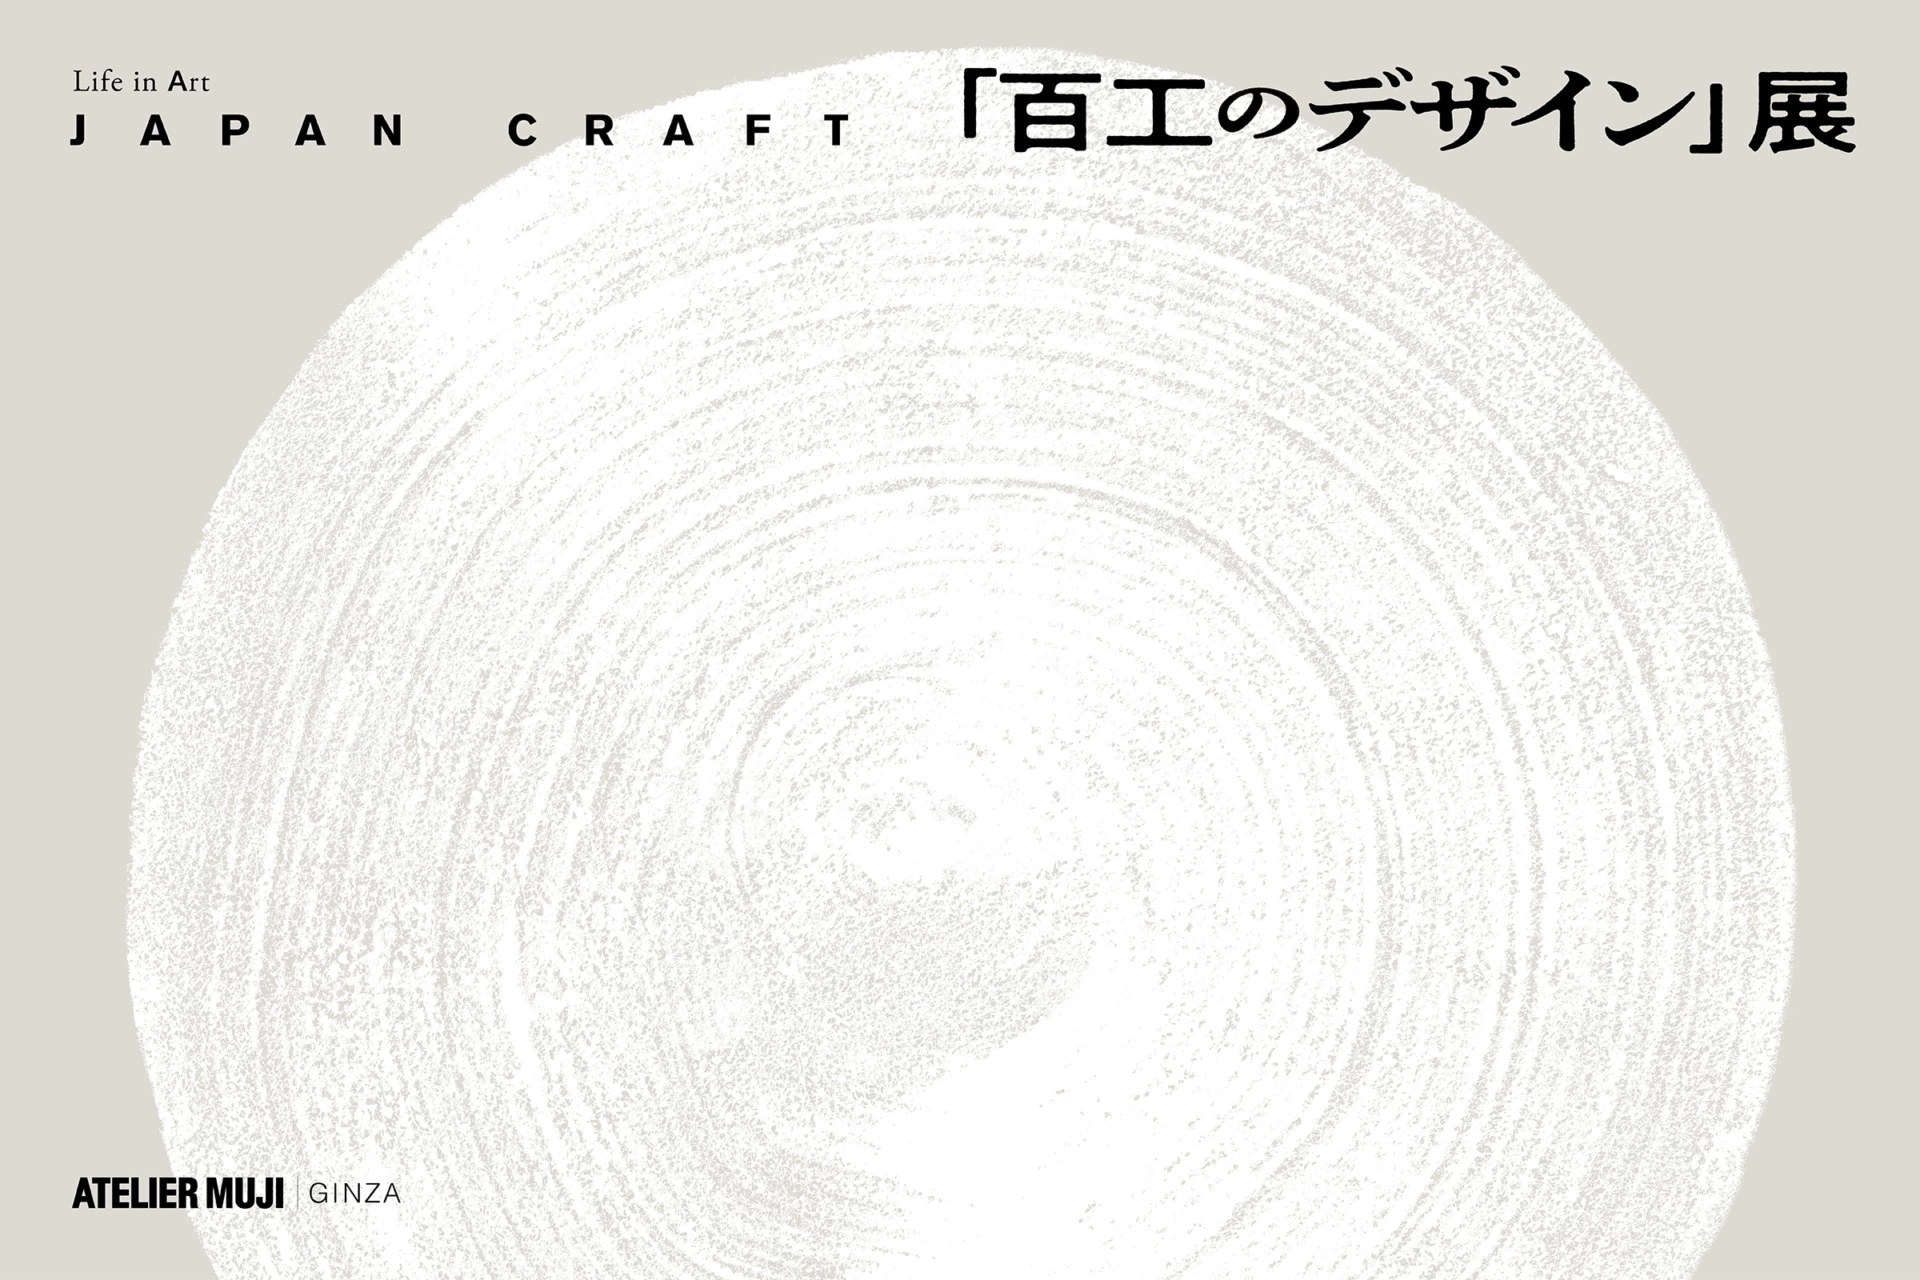 Life in Art JAPAN CRAFT『百工のデザイン』展